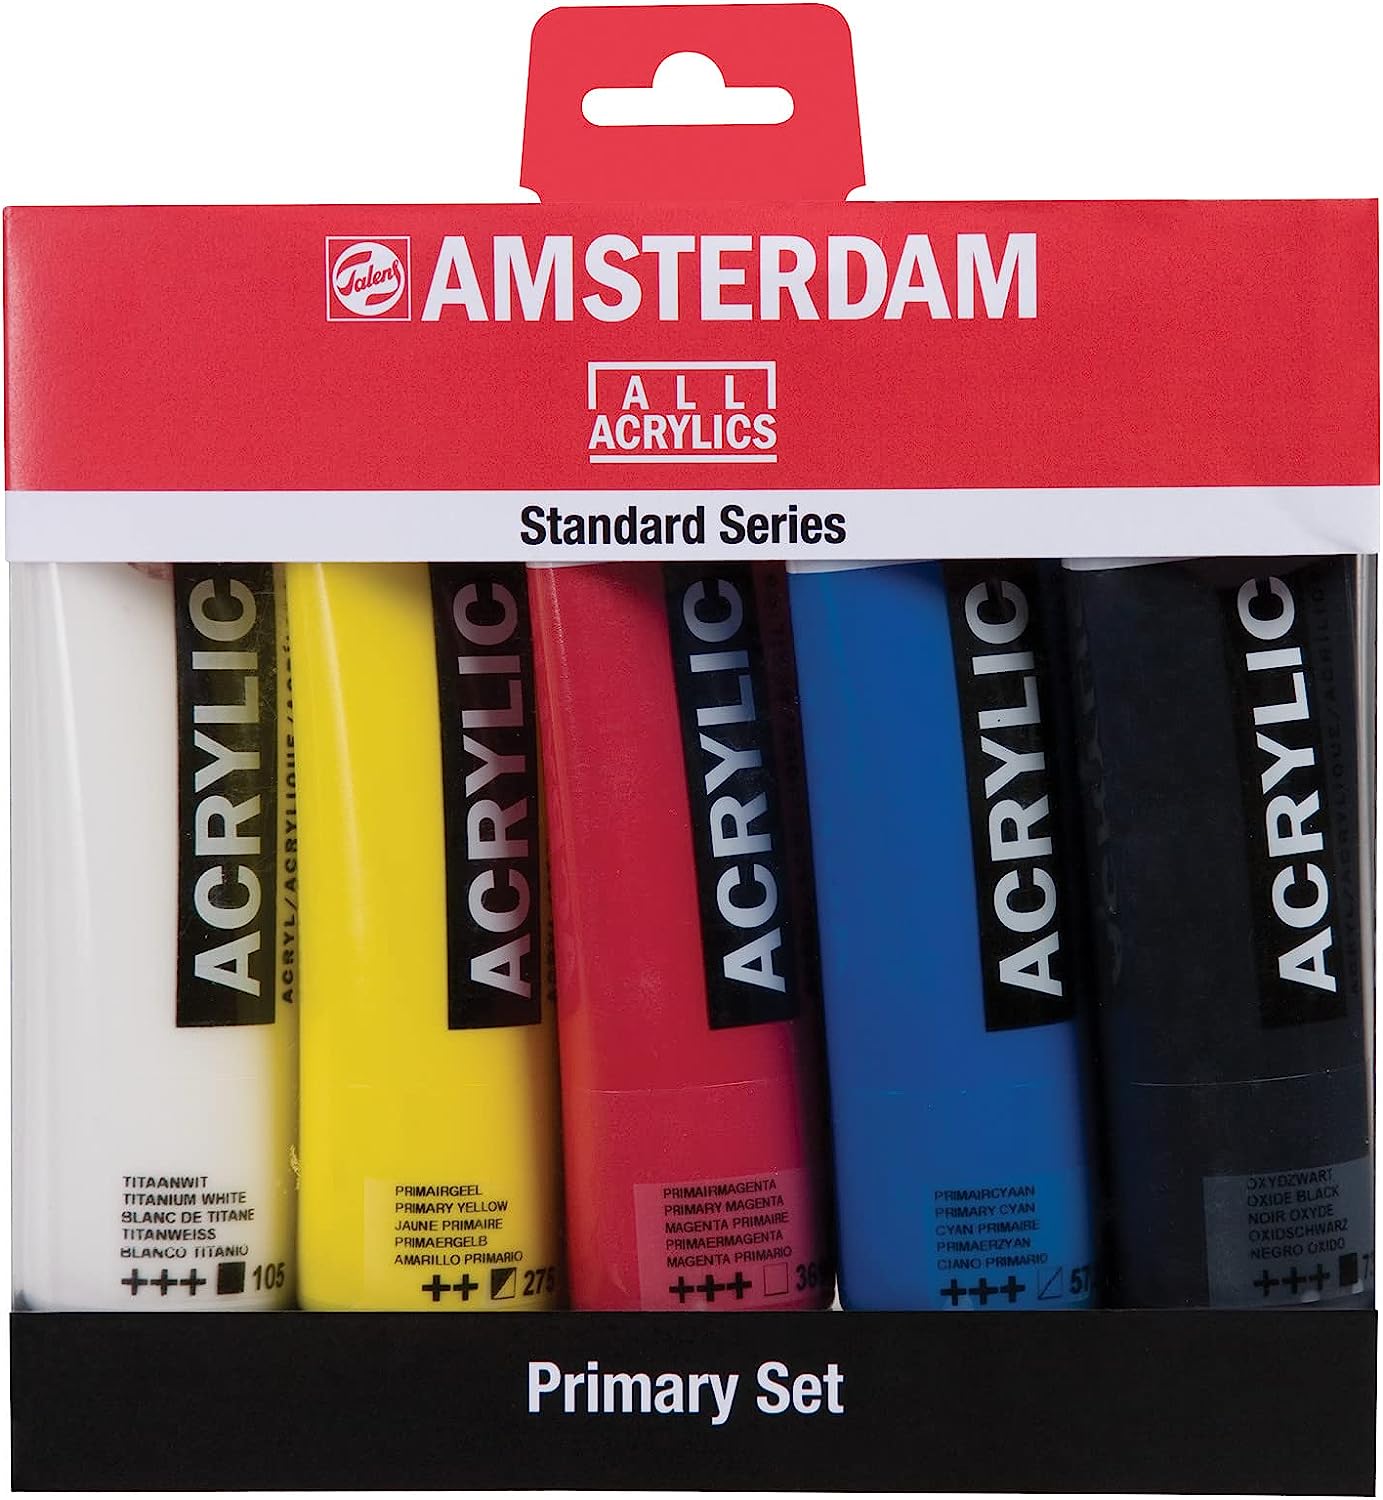 Amsterdam Standard Series acrylics primary set 5x 120 ml